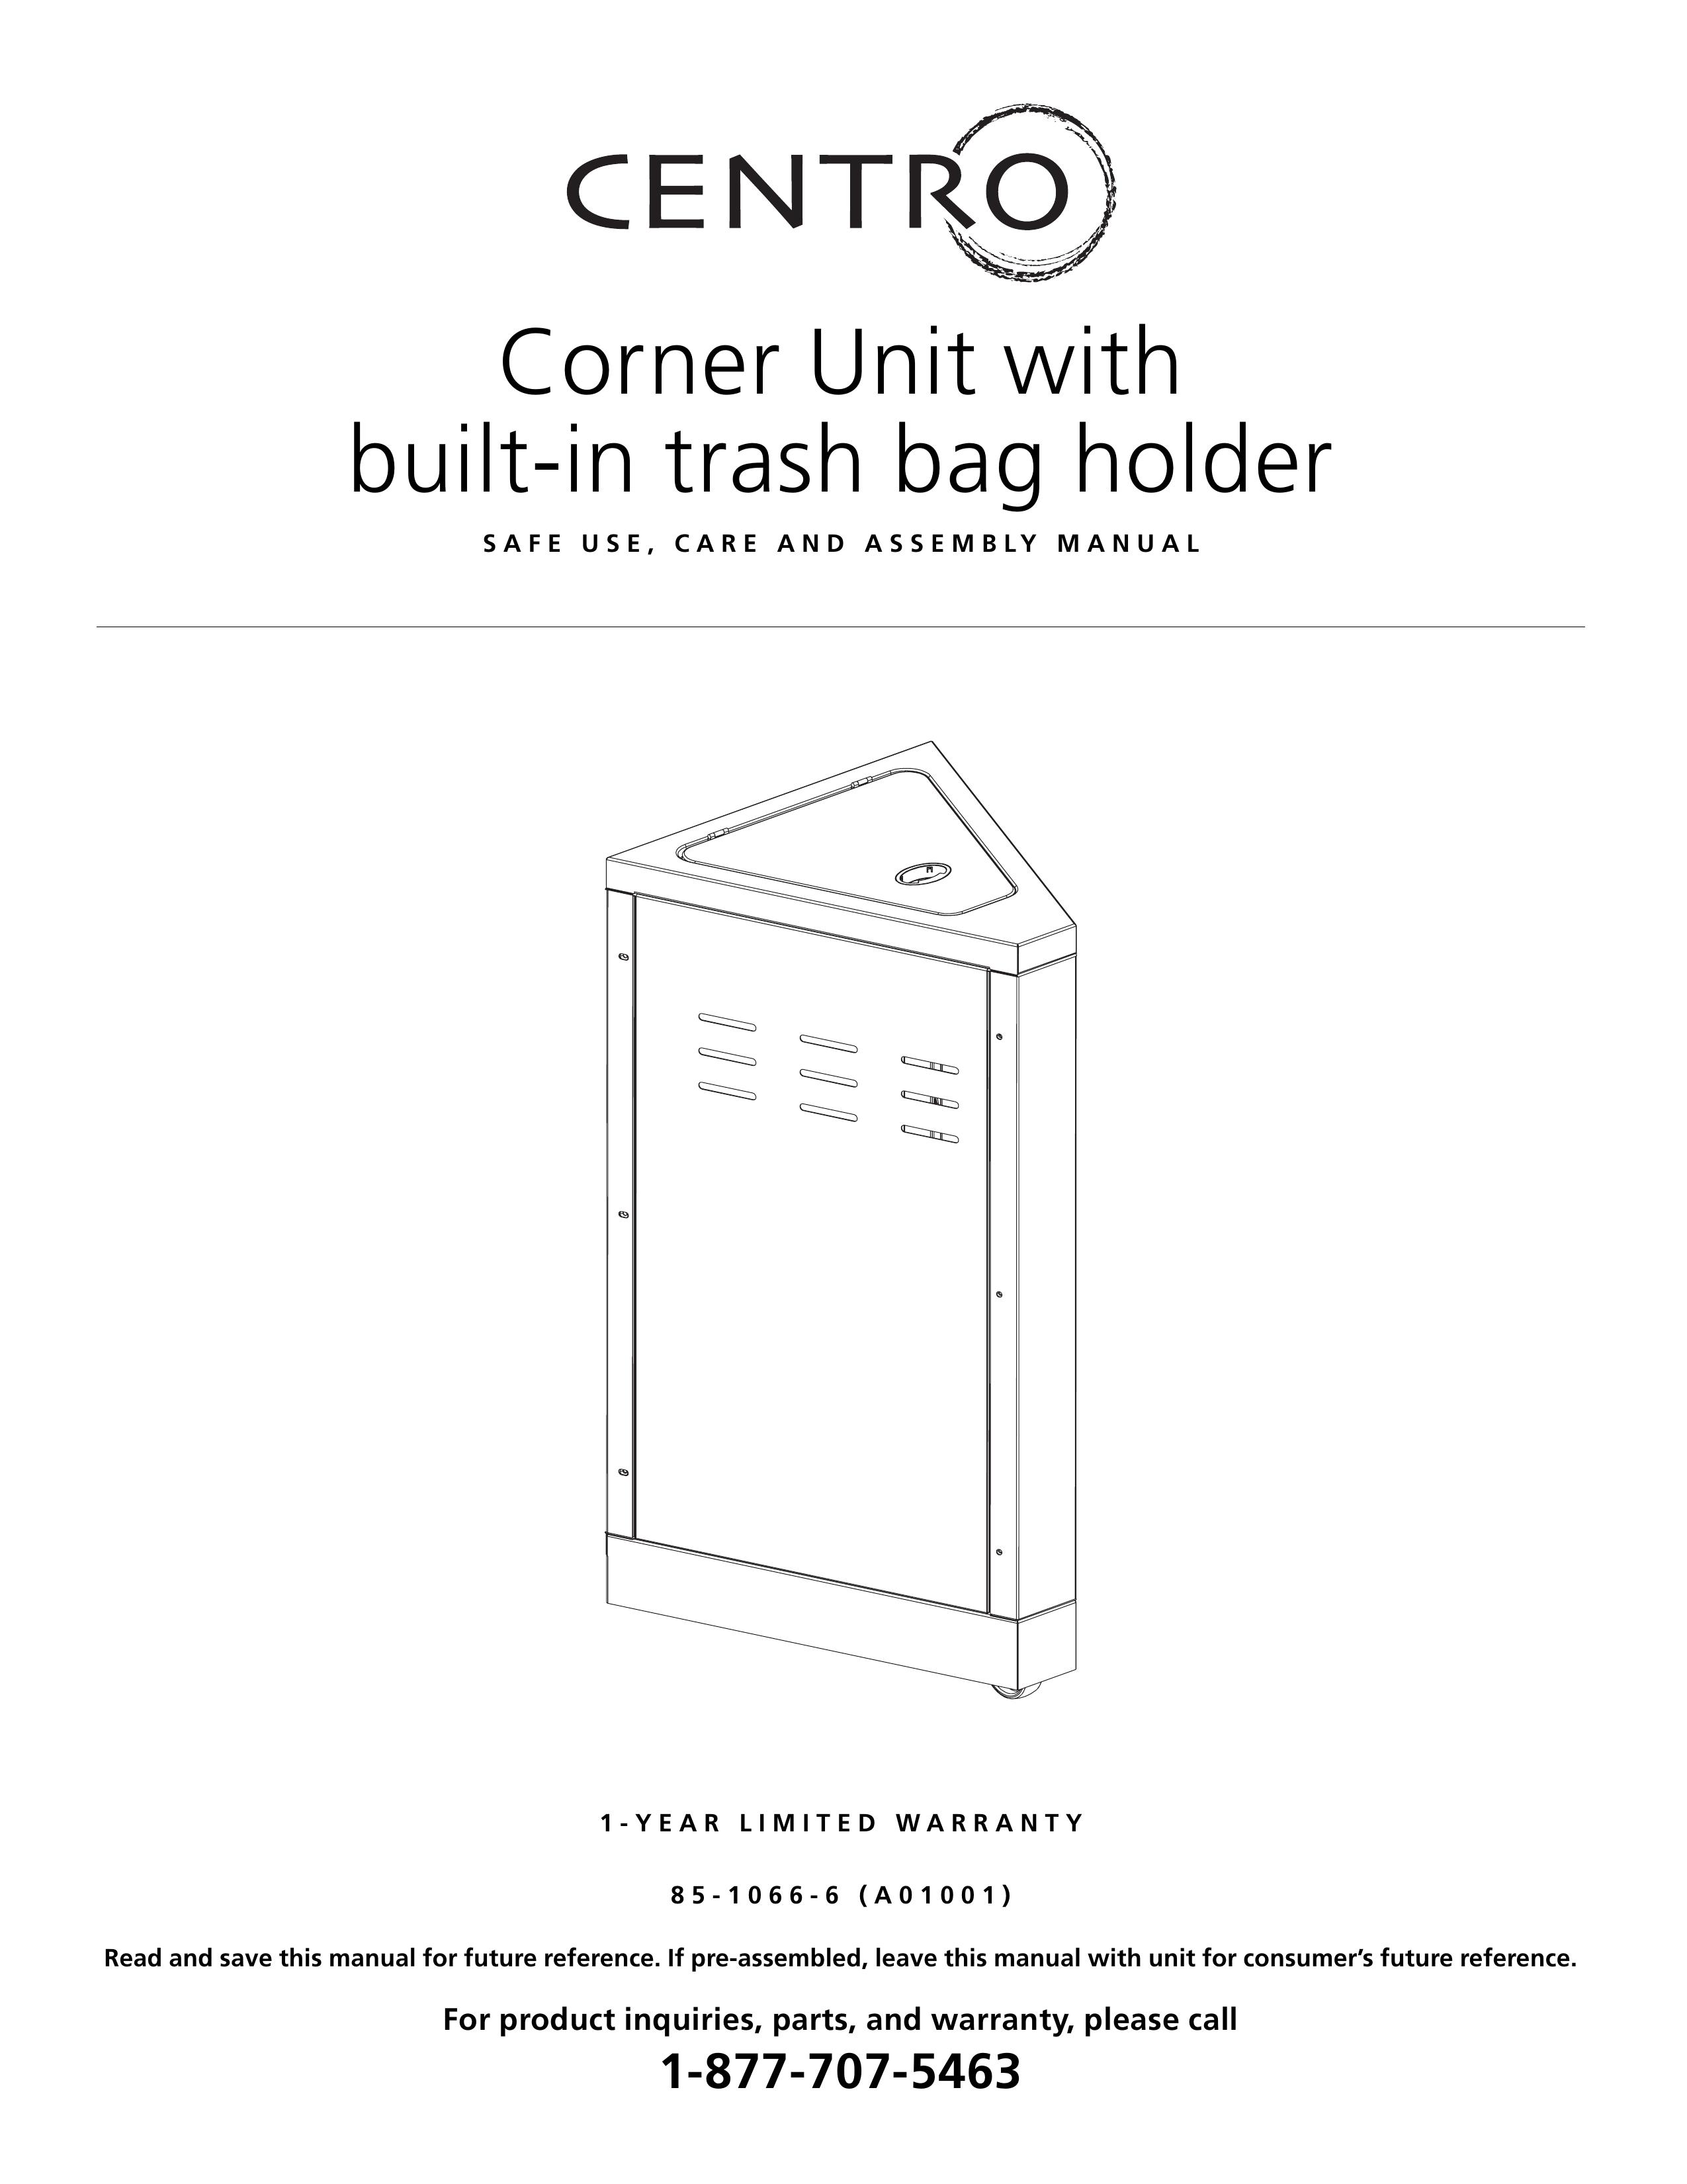 Centro 85-1066-6 (A01001) Trash Compactor User Manual